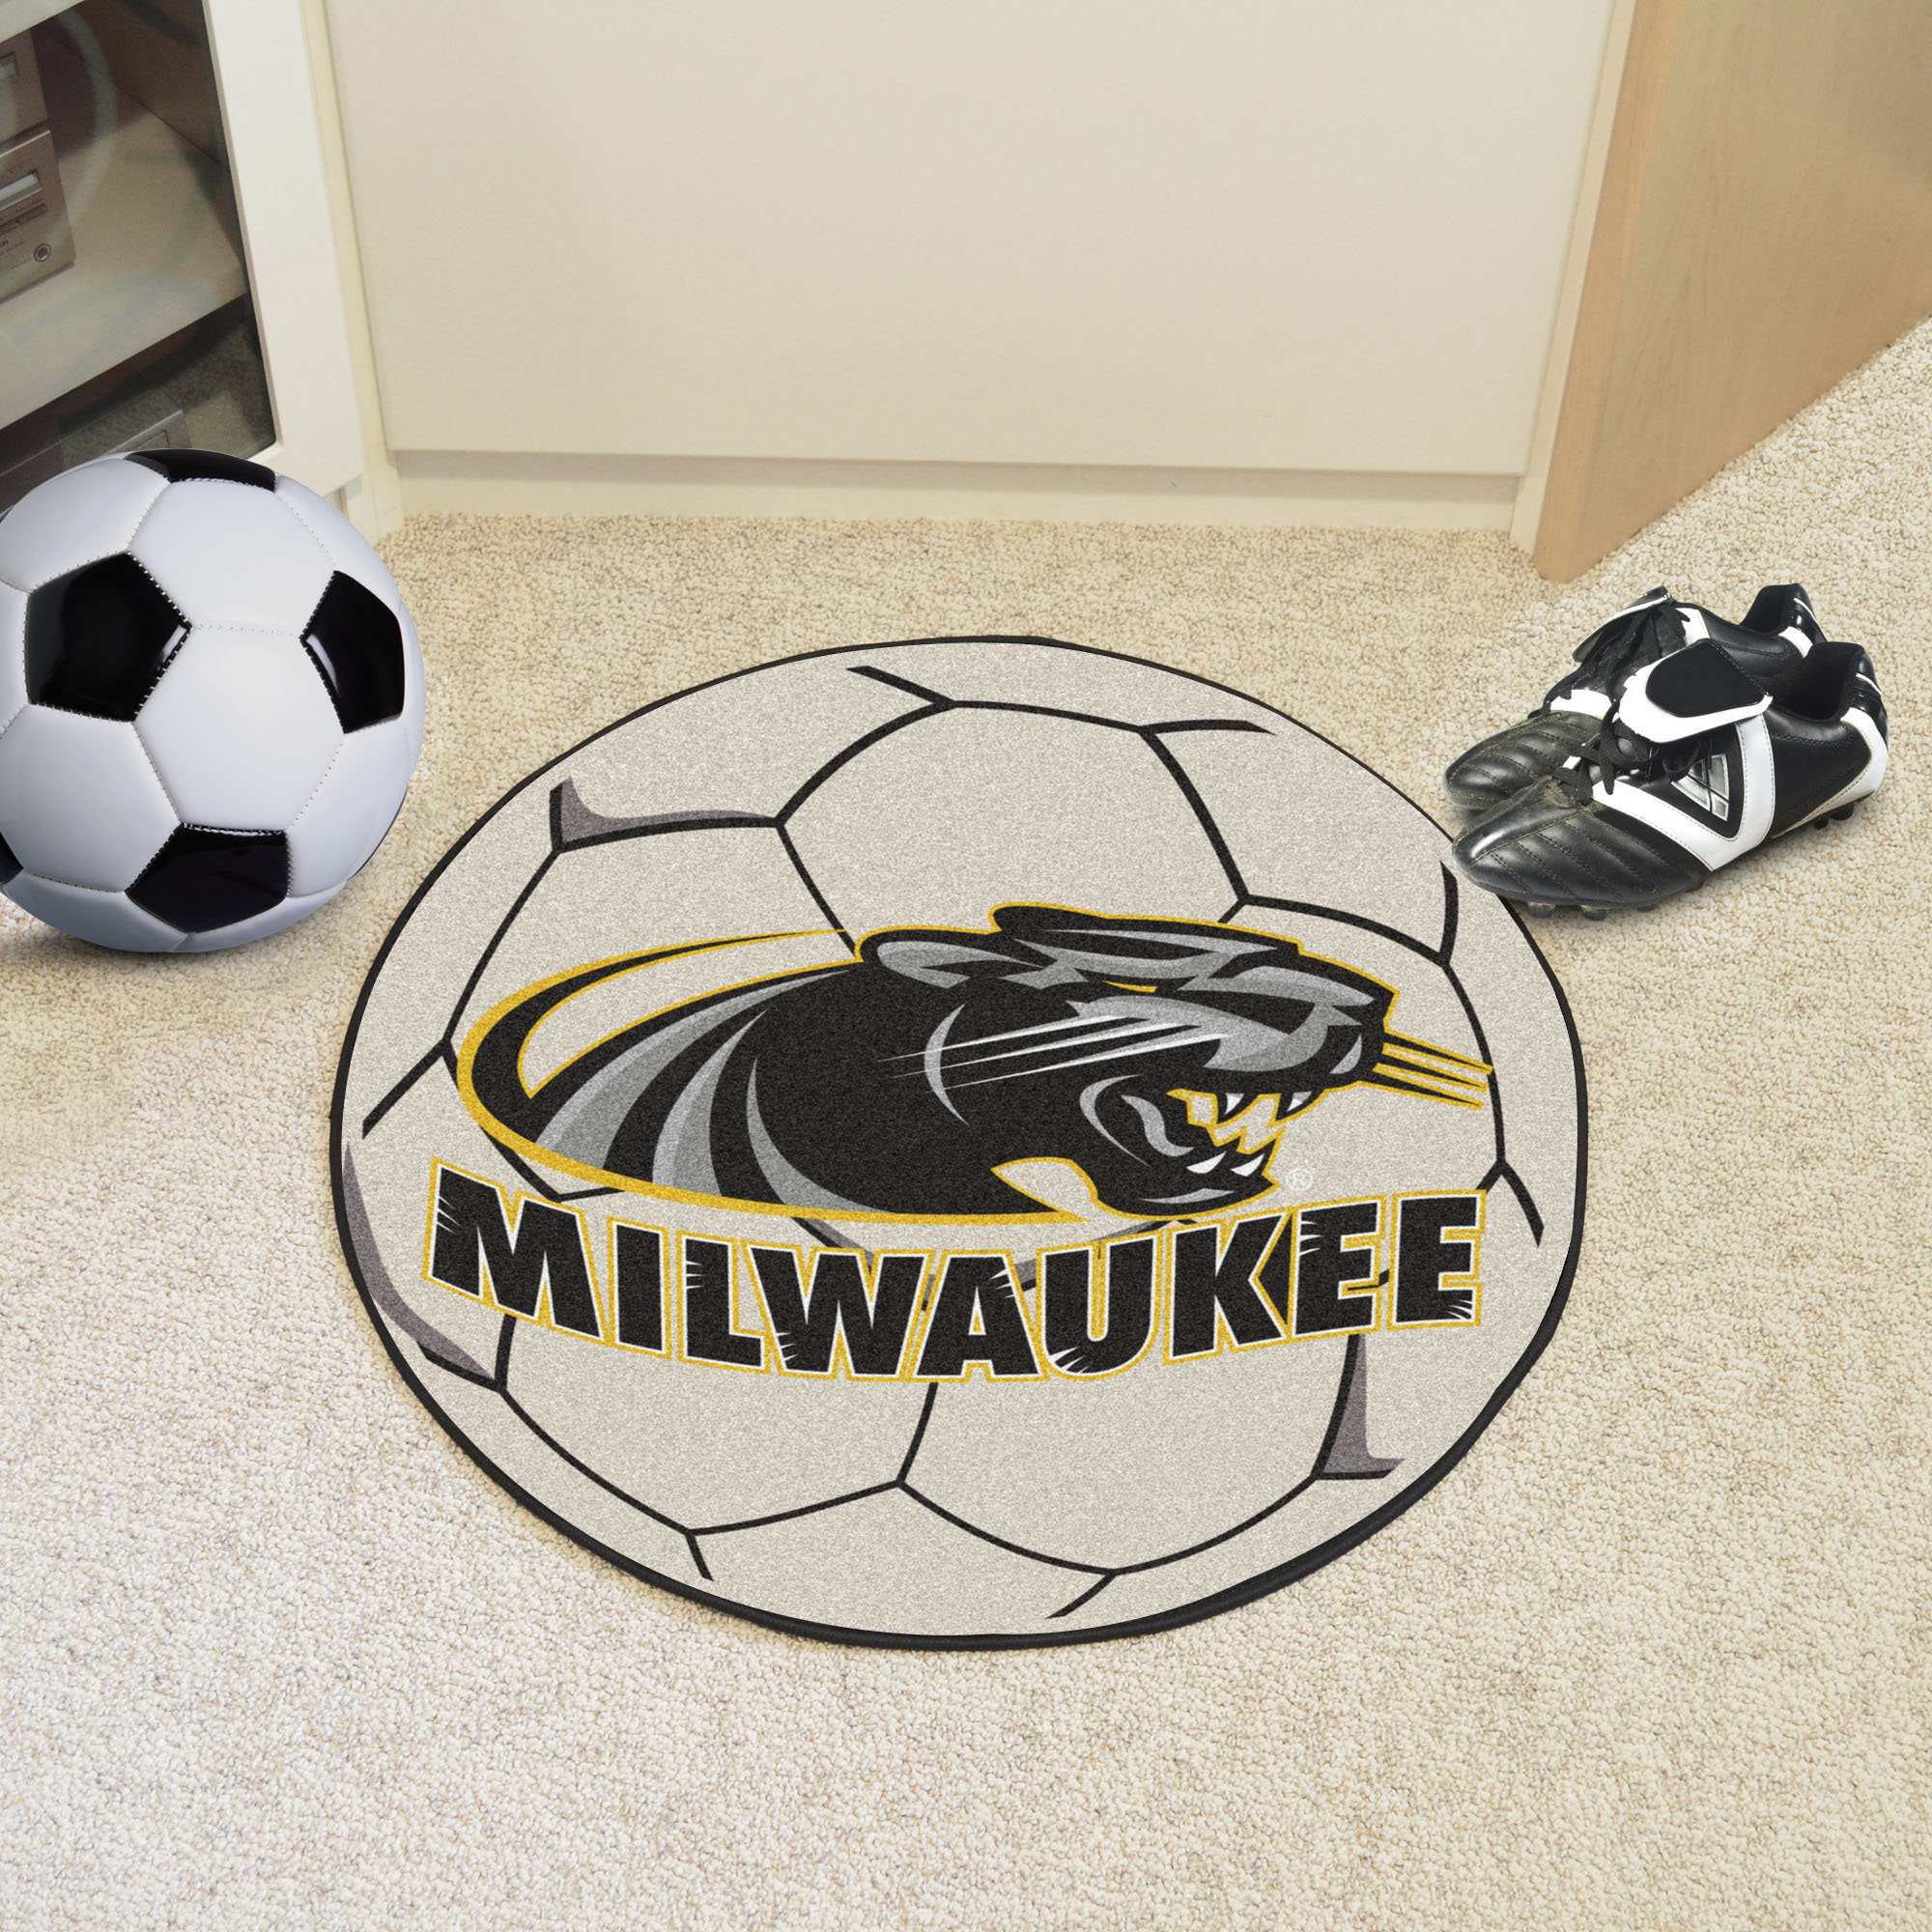 University of Wisconsin-Milwaukee Ball Shaped Area rugs (Ball Shaped Area Rugs: Soccer Ball)